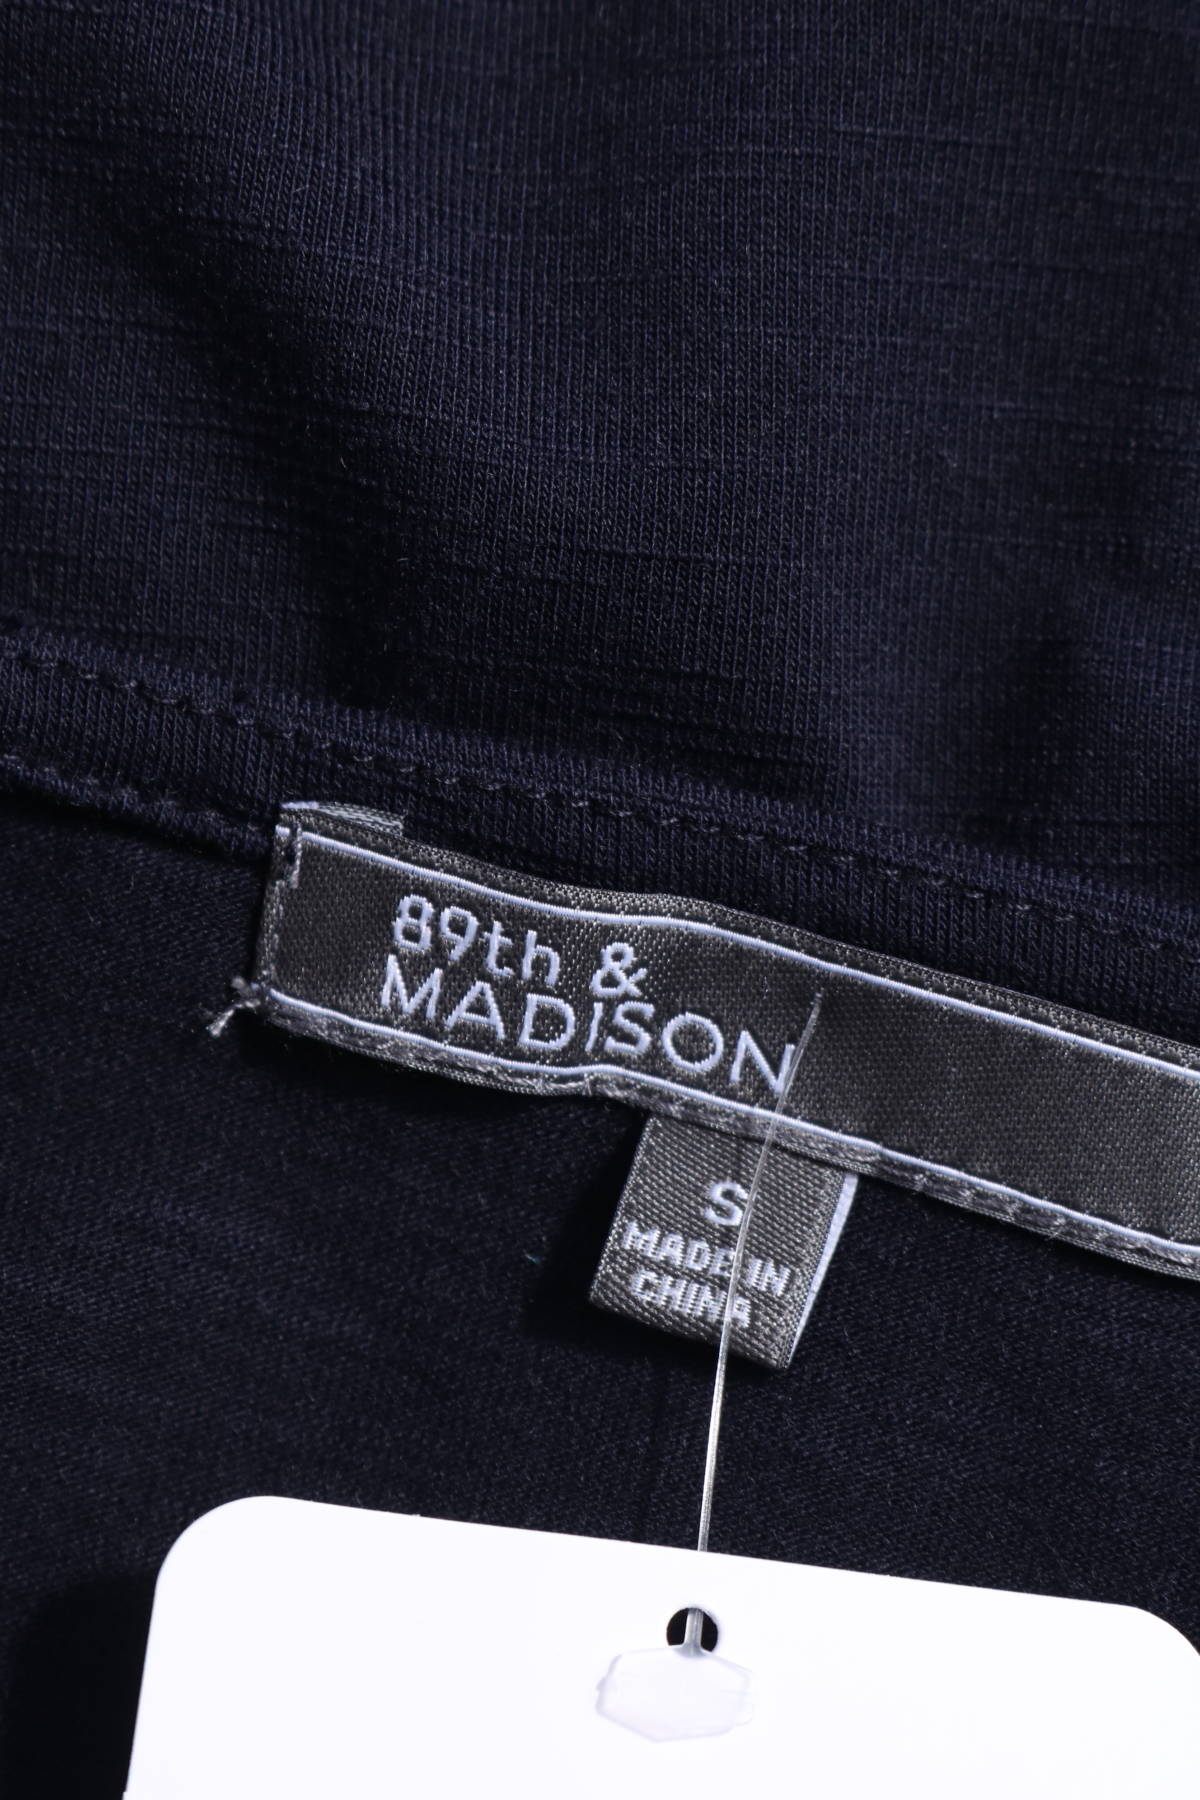 Блуза 89TH & MADISON3